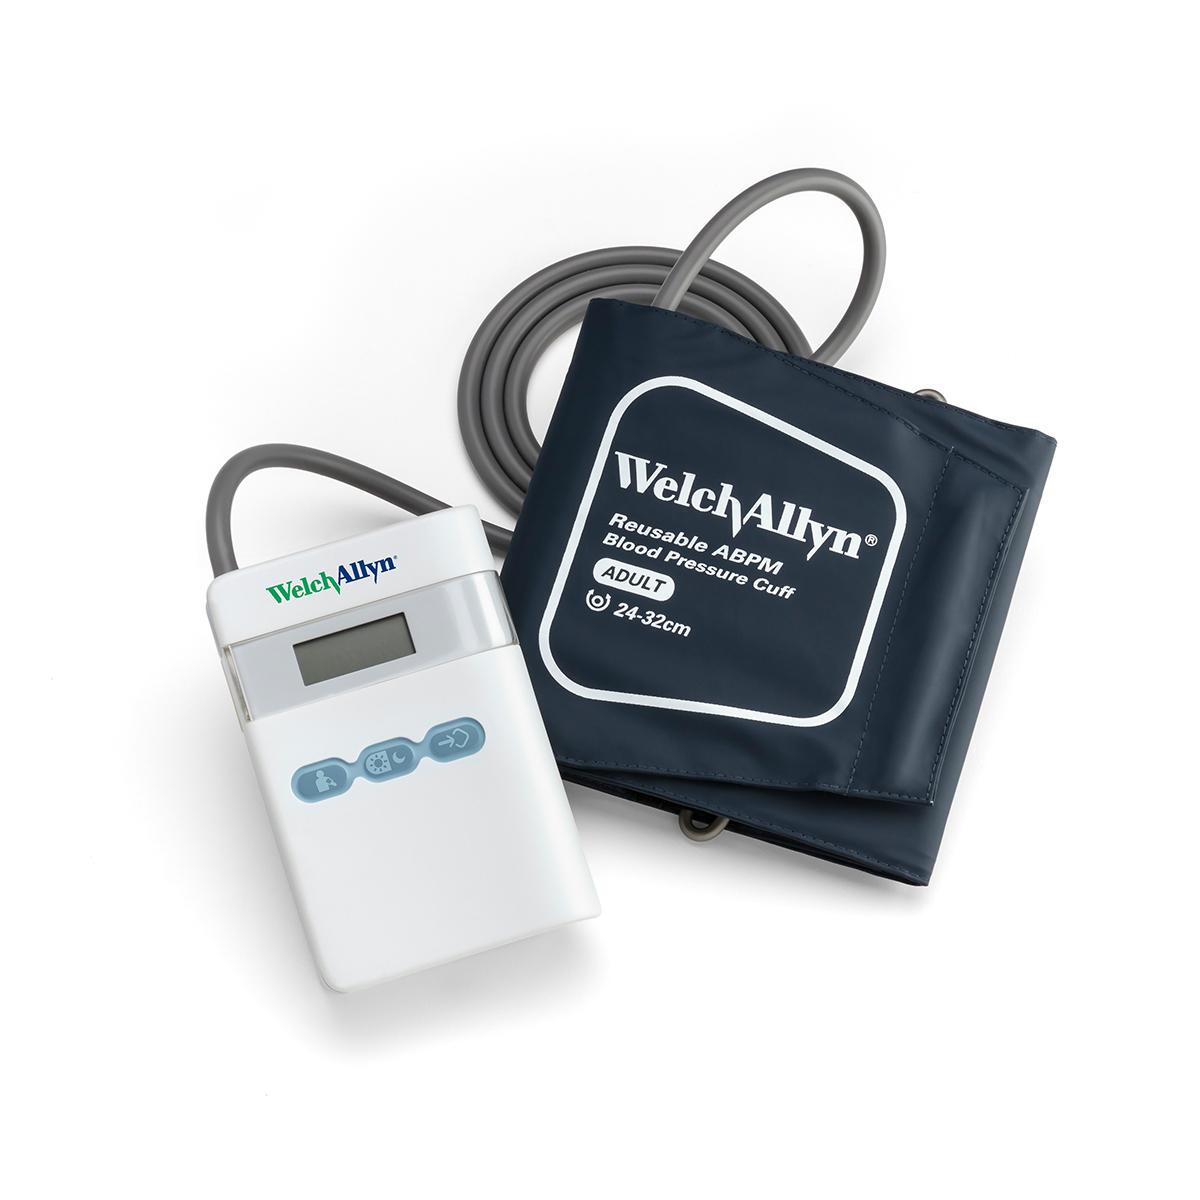 ABPM 7100 Ambulatory Blood Pressure Monitor and cuff on white background, overhead shot